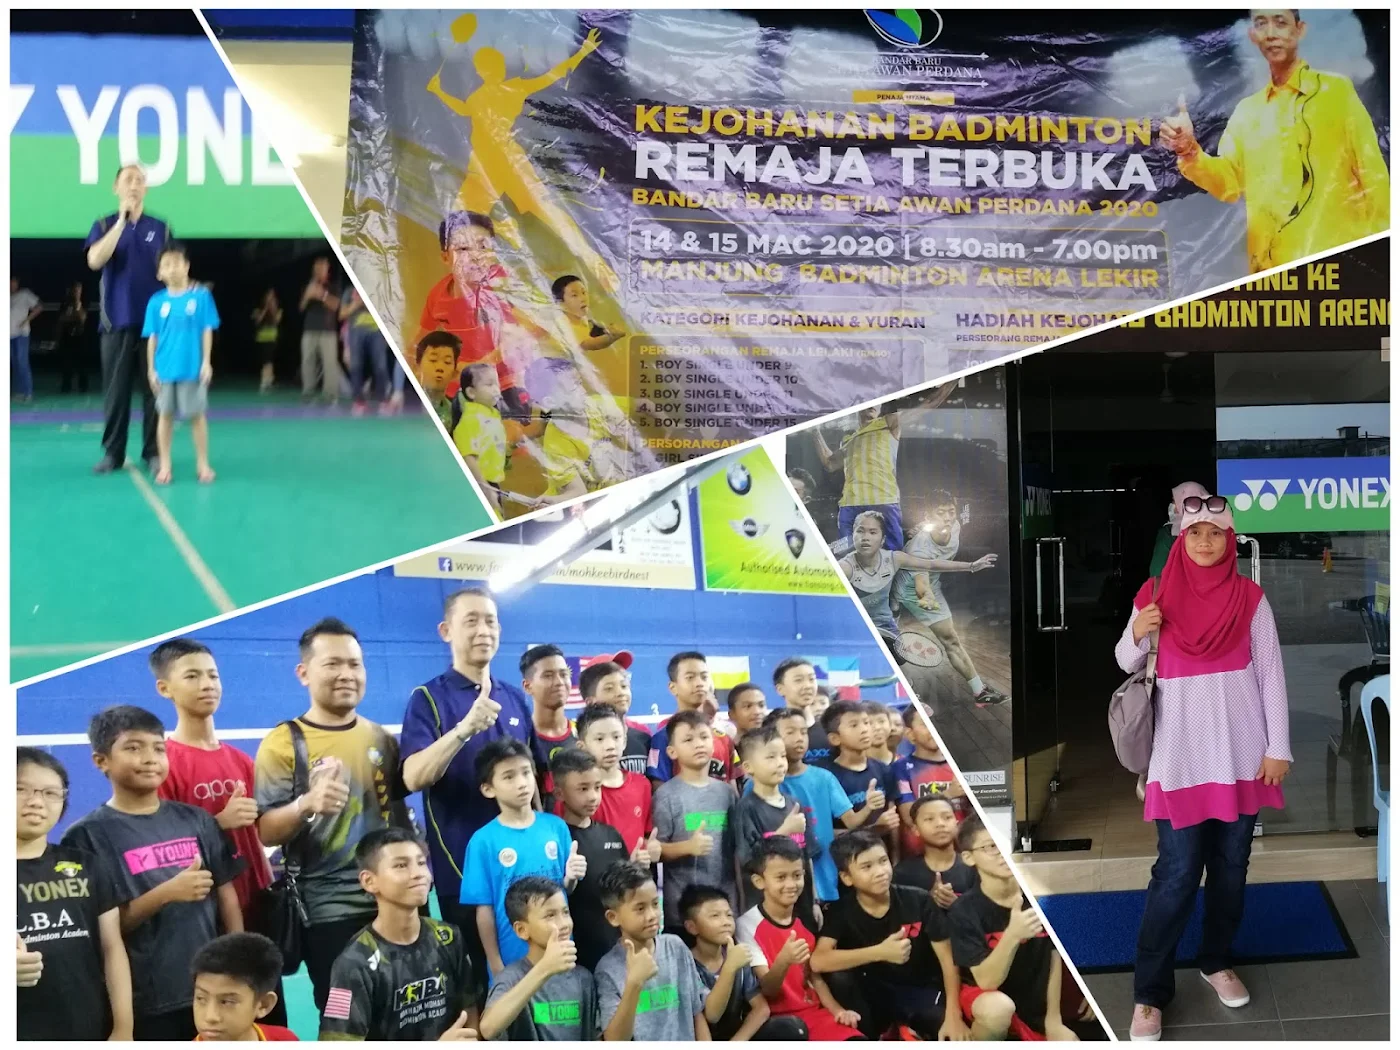 intensive badminton training for kids -Nusa Mahsuri Training Programmes  I would like to inform that Nusa Mahsuri, a professional badminton club in Malaysia